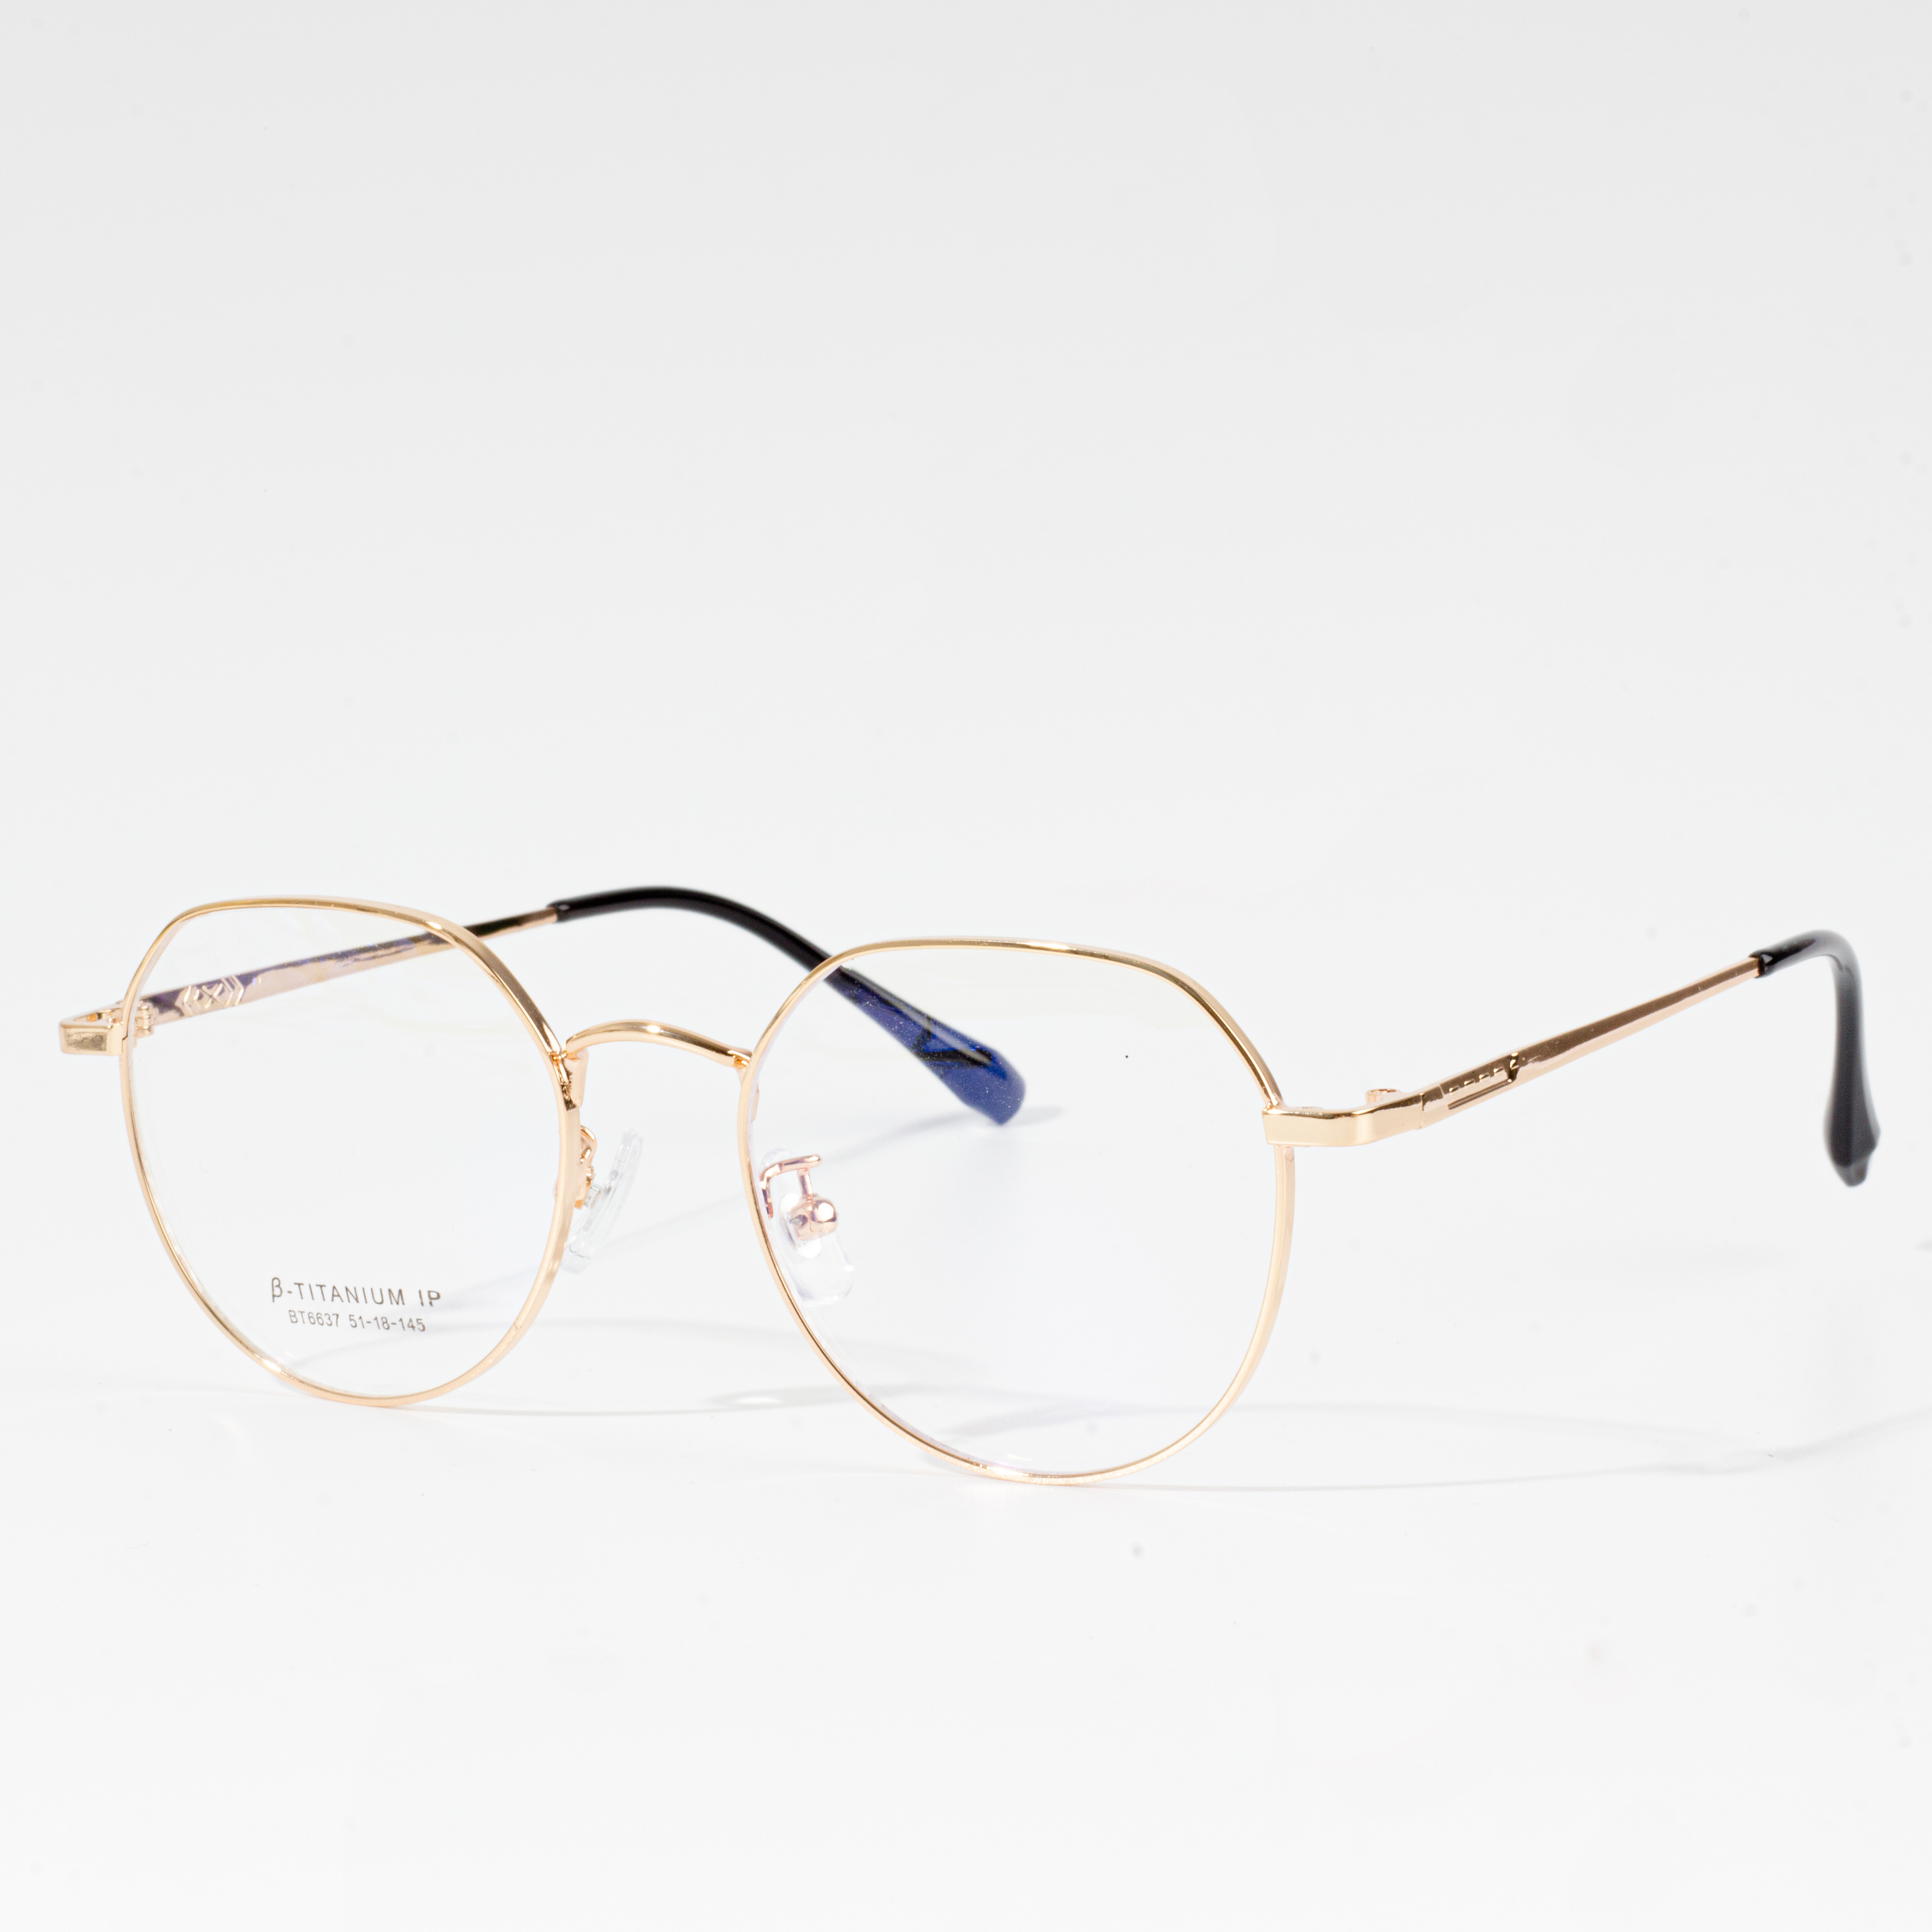 fráma eyeglass in aice liom